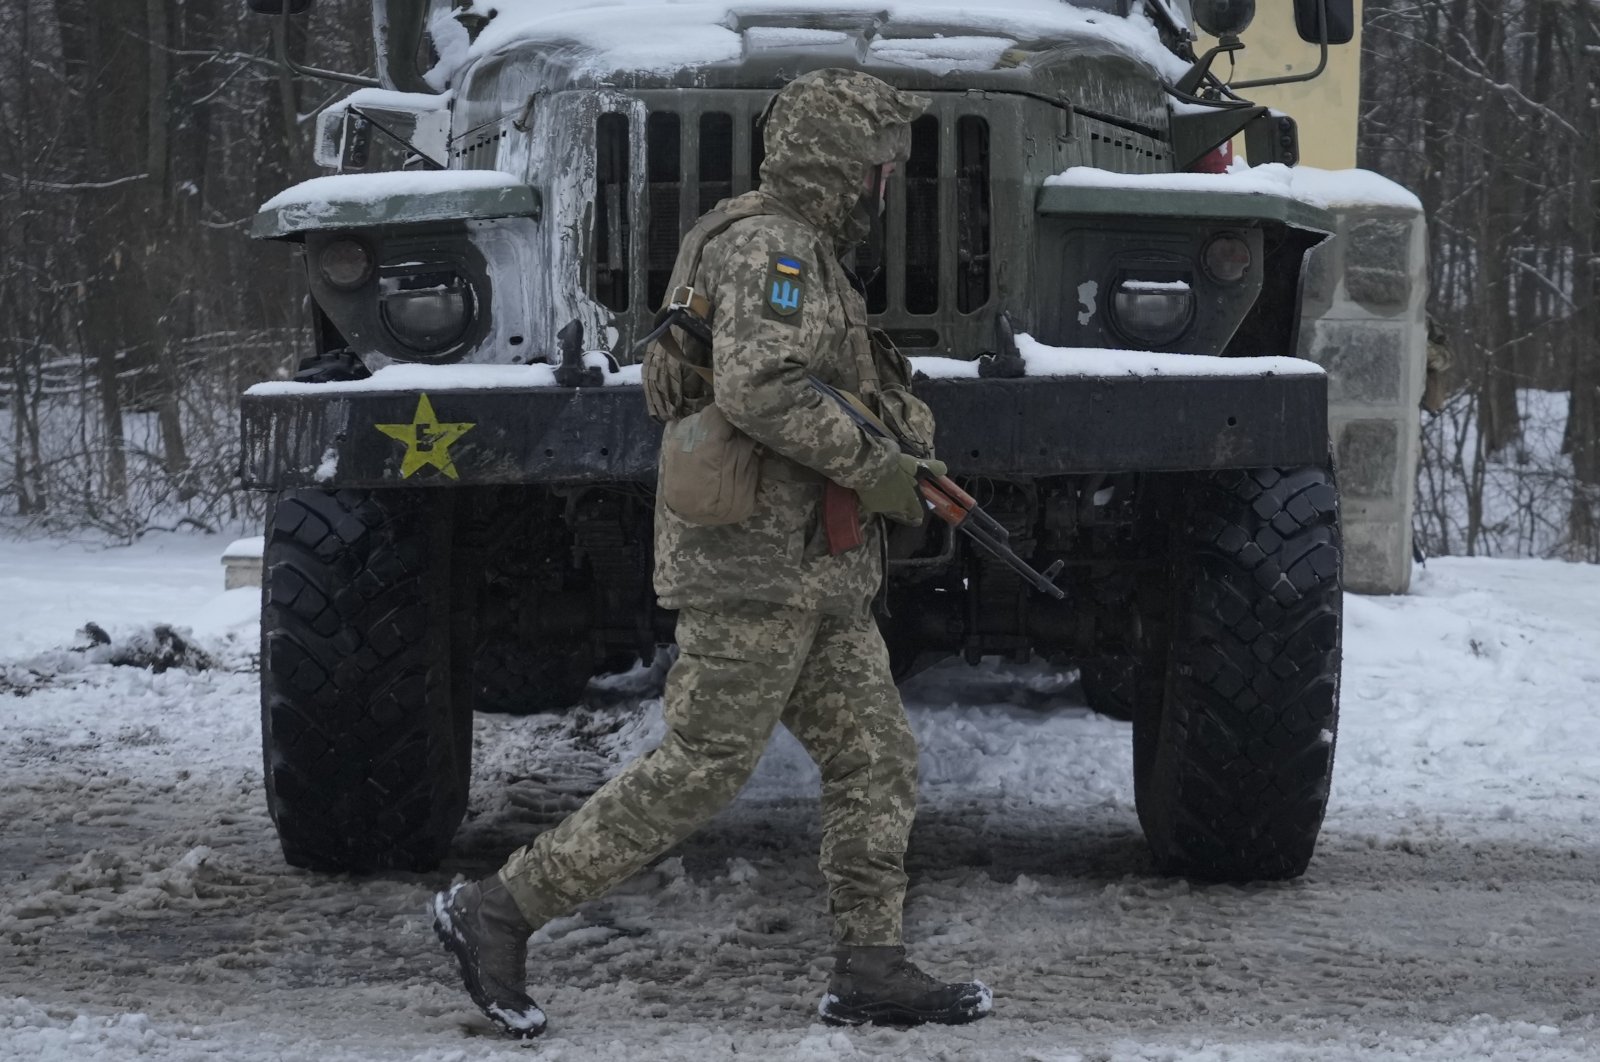 A Ukrainian serviceman walks by a deactivated Russian military multiple rocket launcher on the outskirts of Kharkiv, Ukraine, Feb. 25, 2022. (AP Photo)